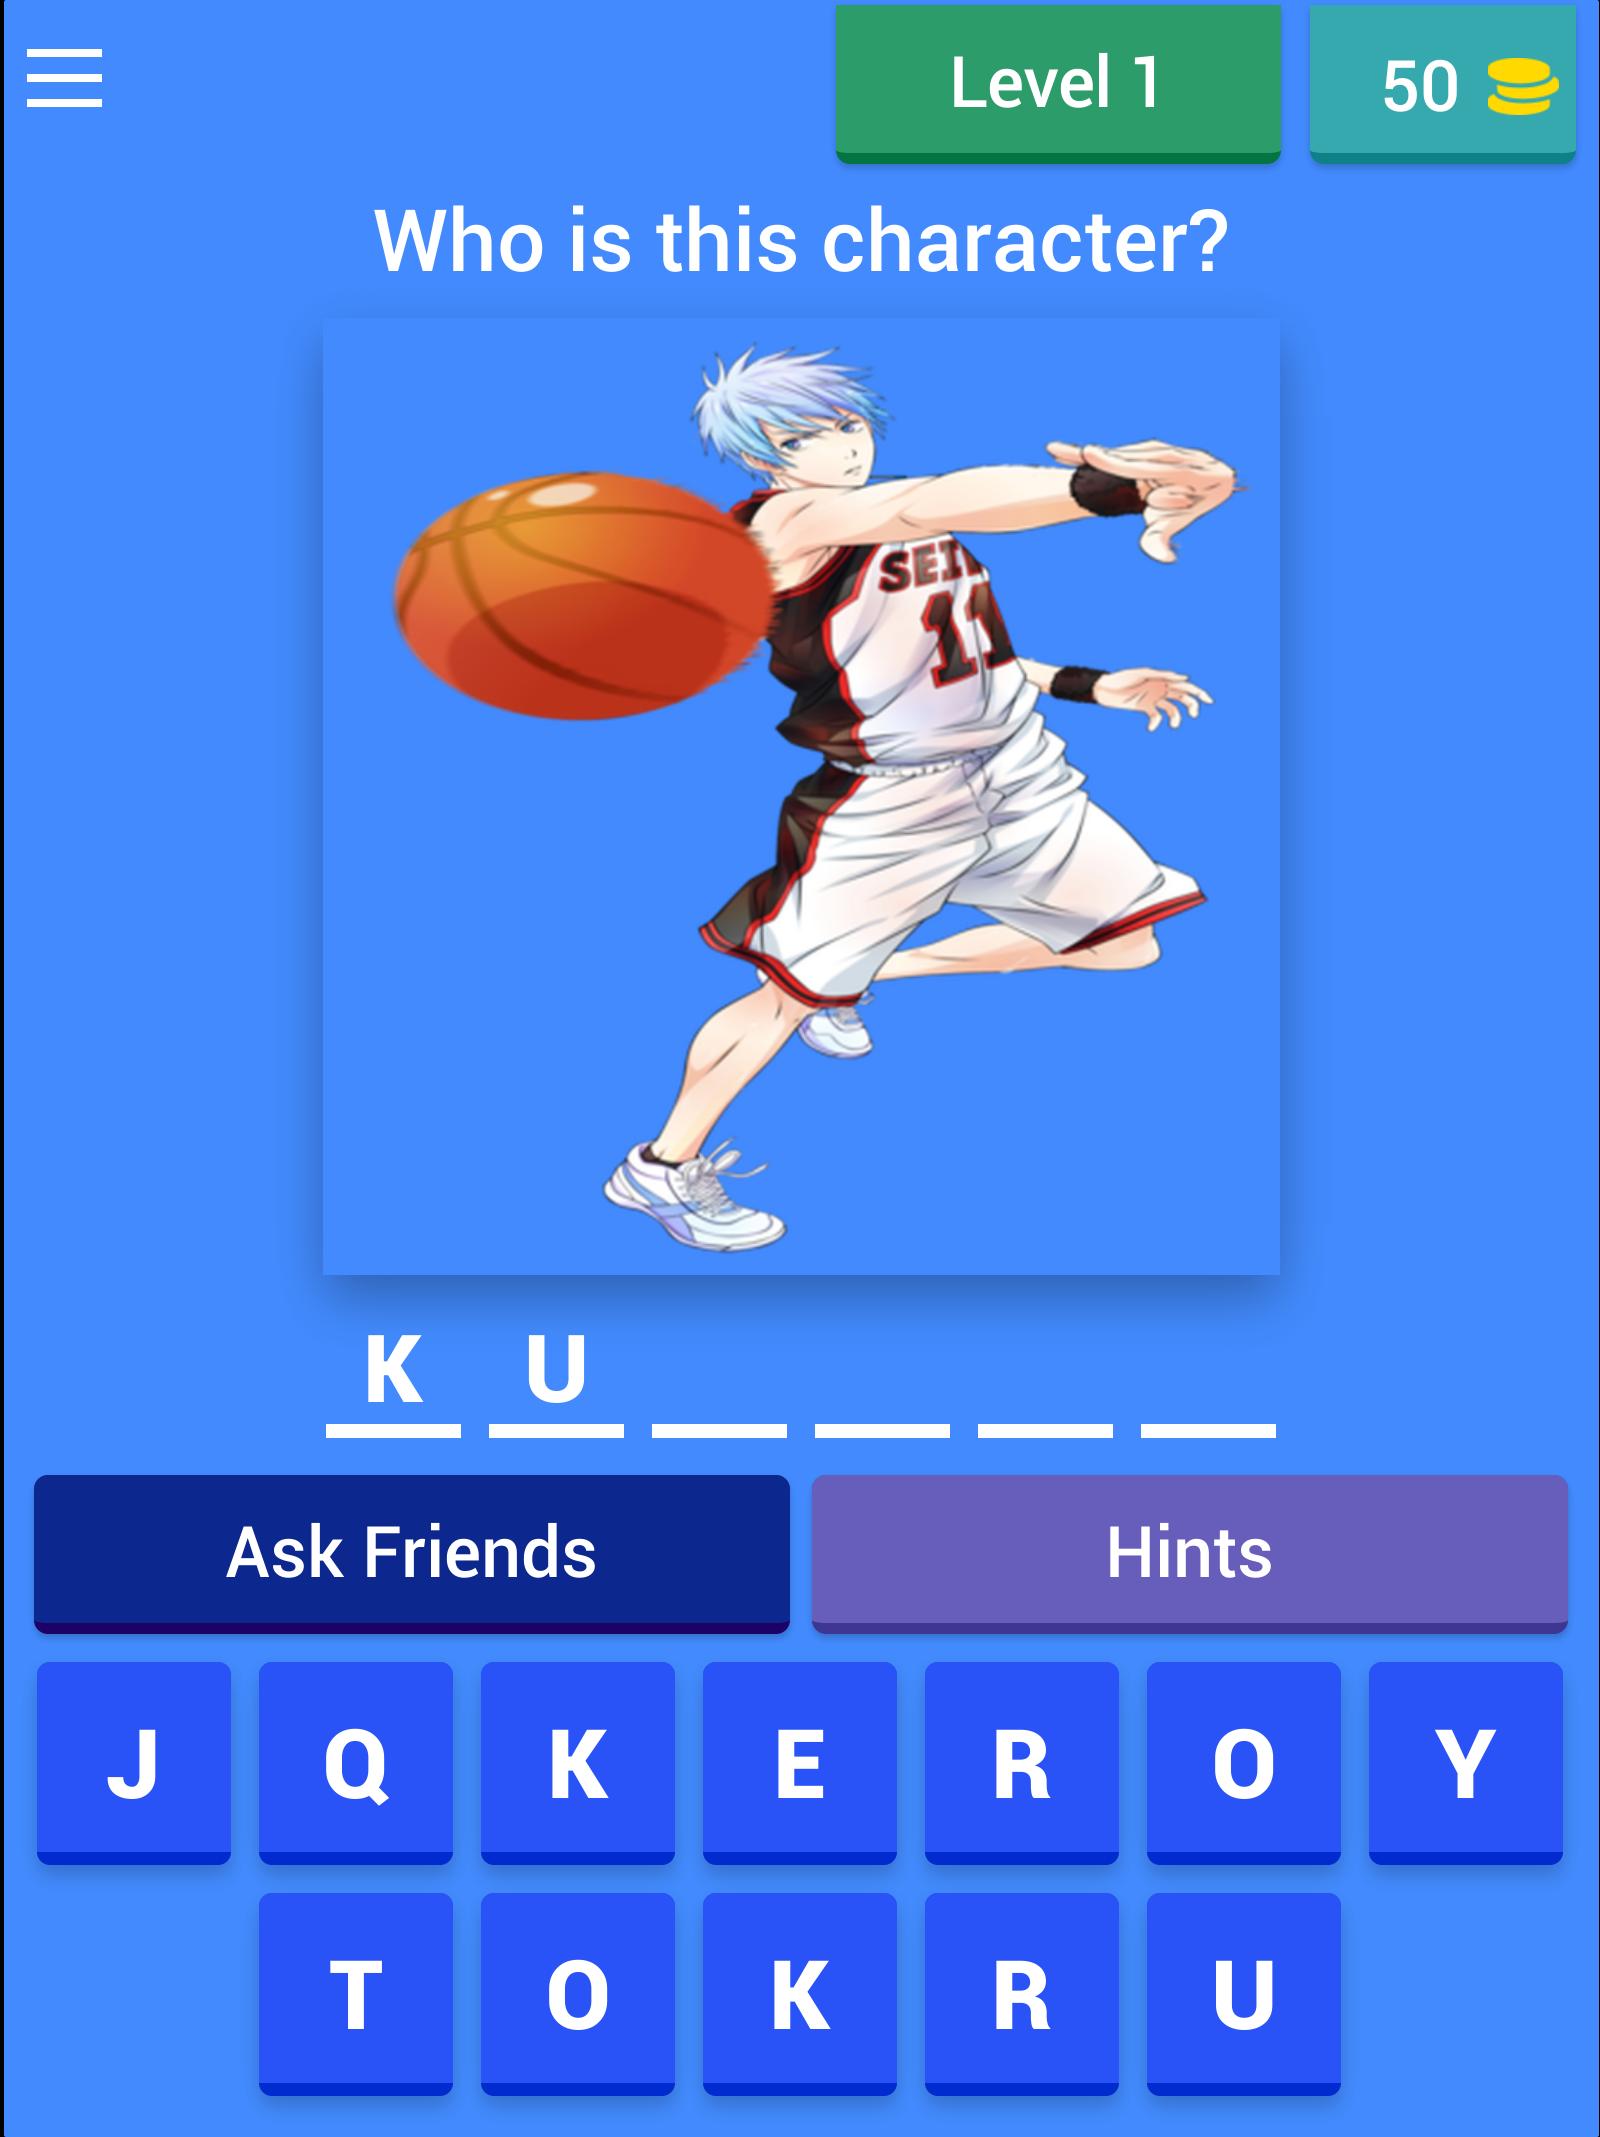 Kuroko no Basket - Quiz fácil!